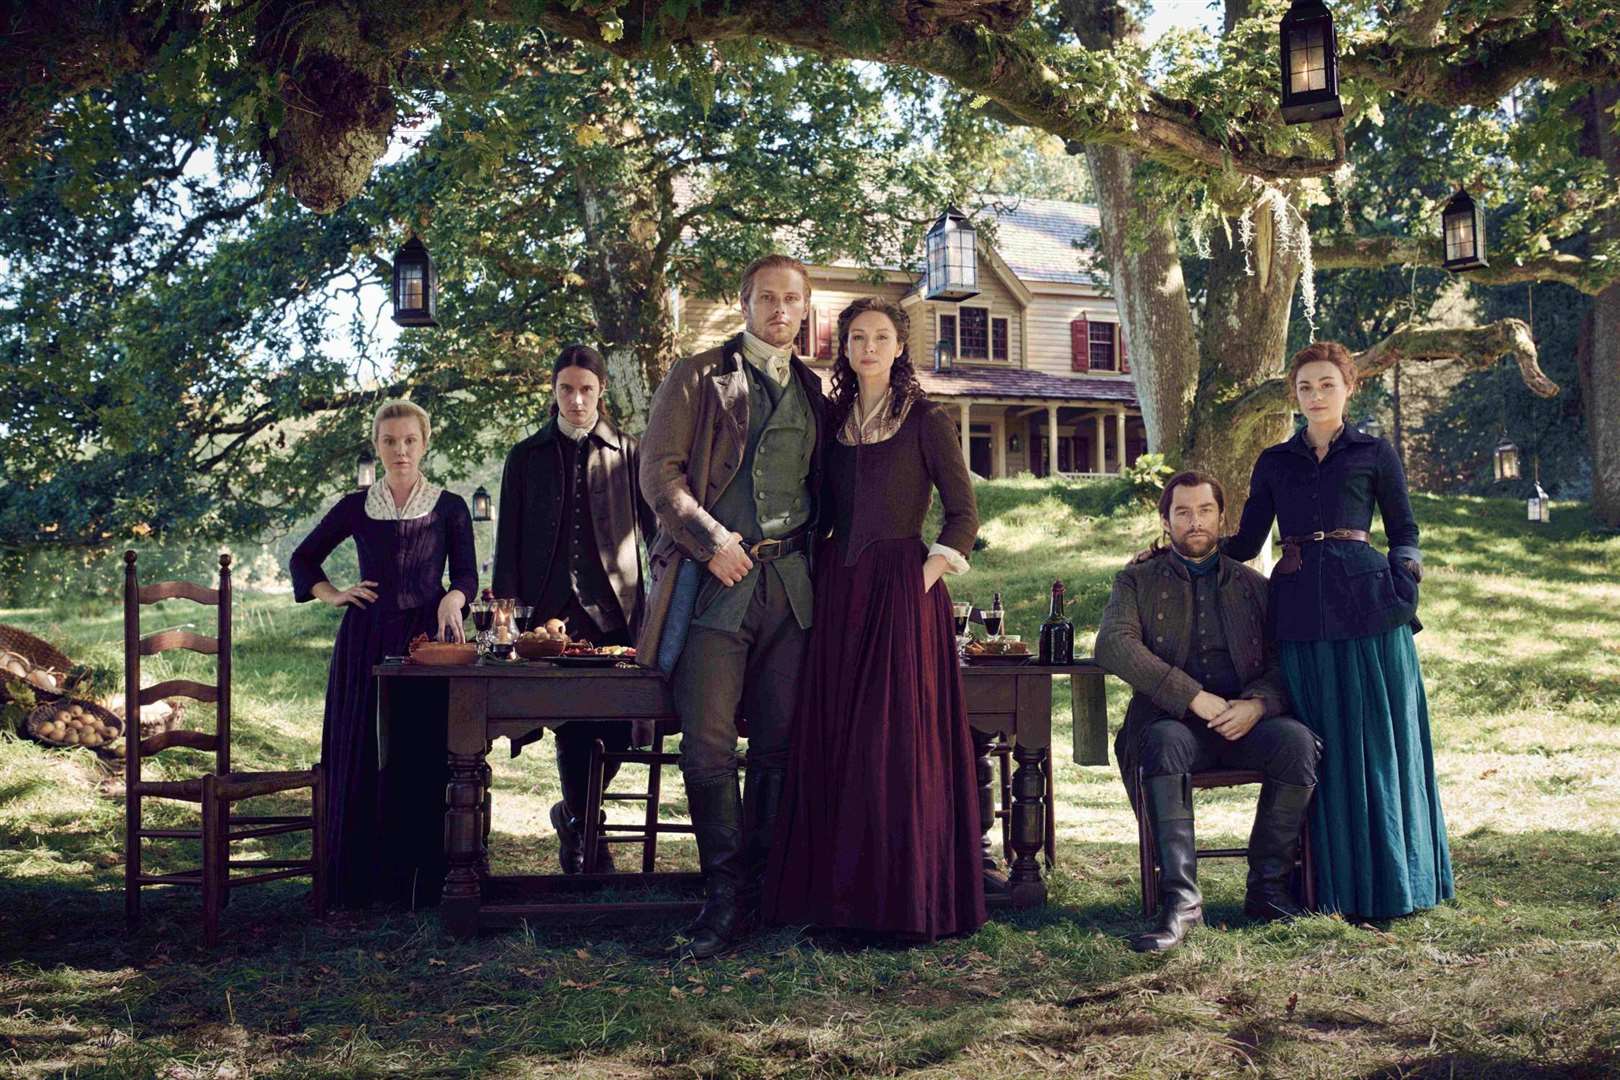 The Outlander series cast